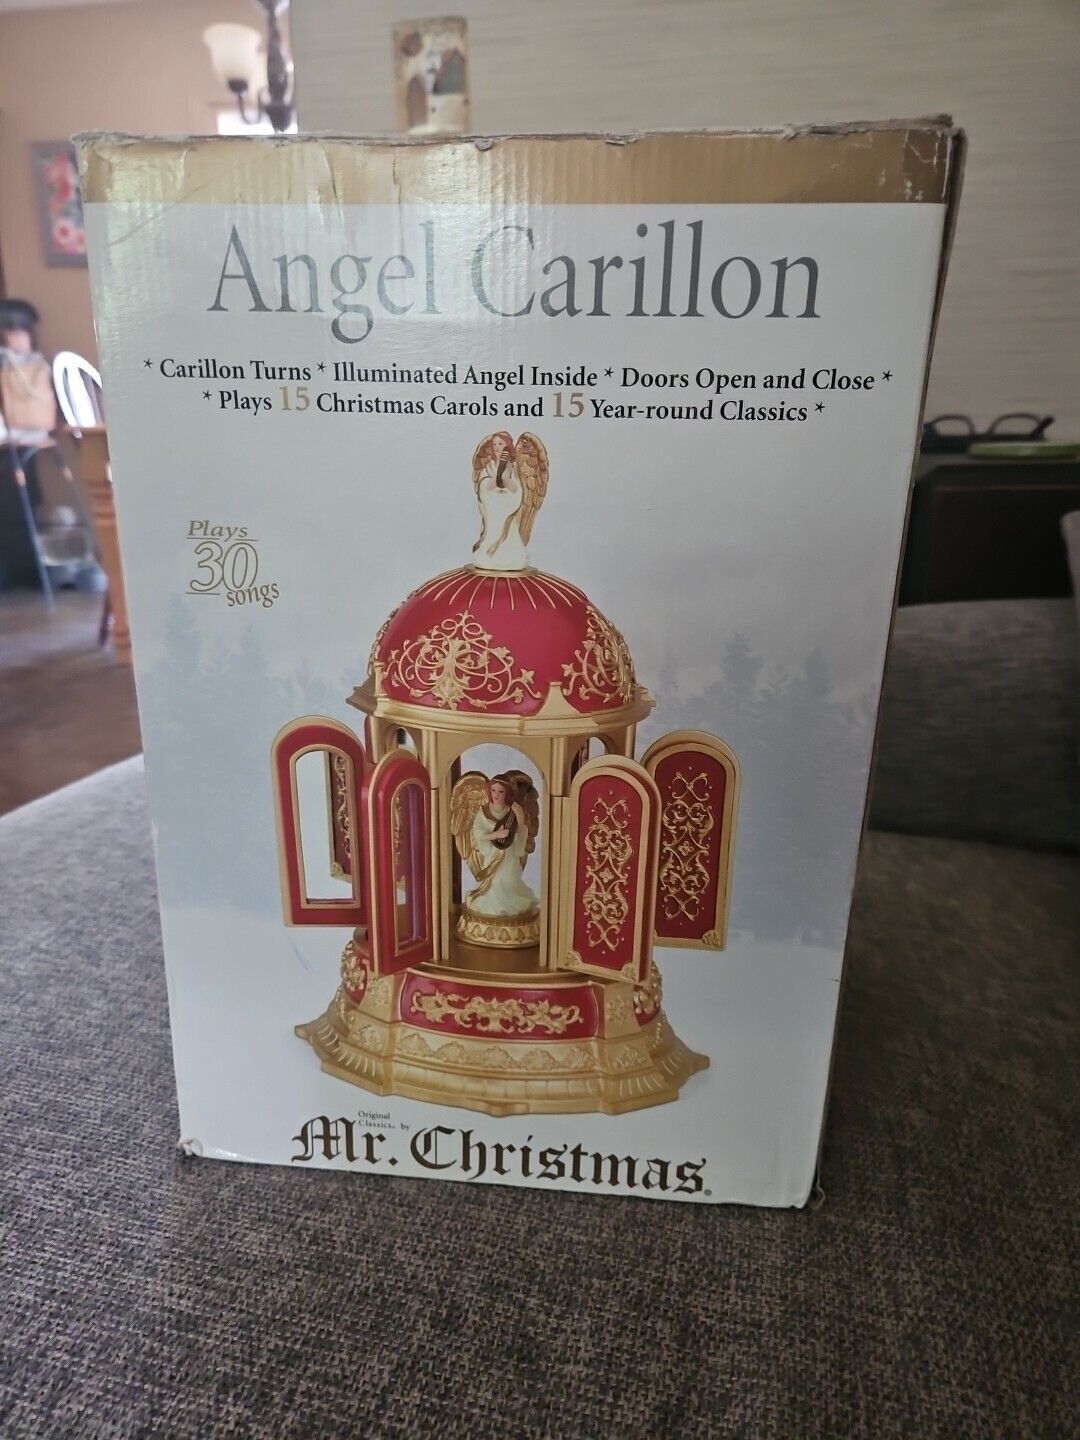 MR CHRISTMAS ANIMATED MUSICAL ANGEL CARILLON CAROUSEL PLAYS 30 SONGS 